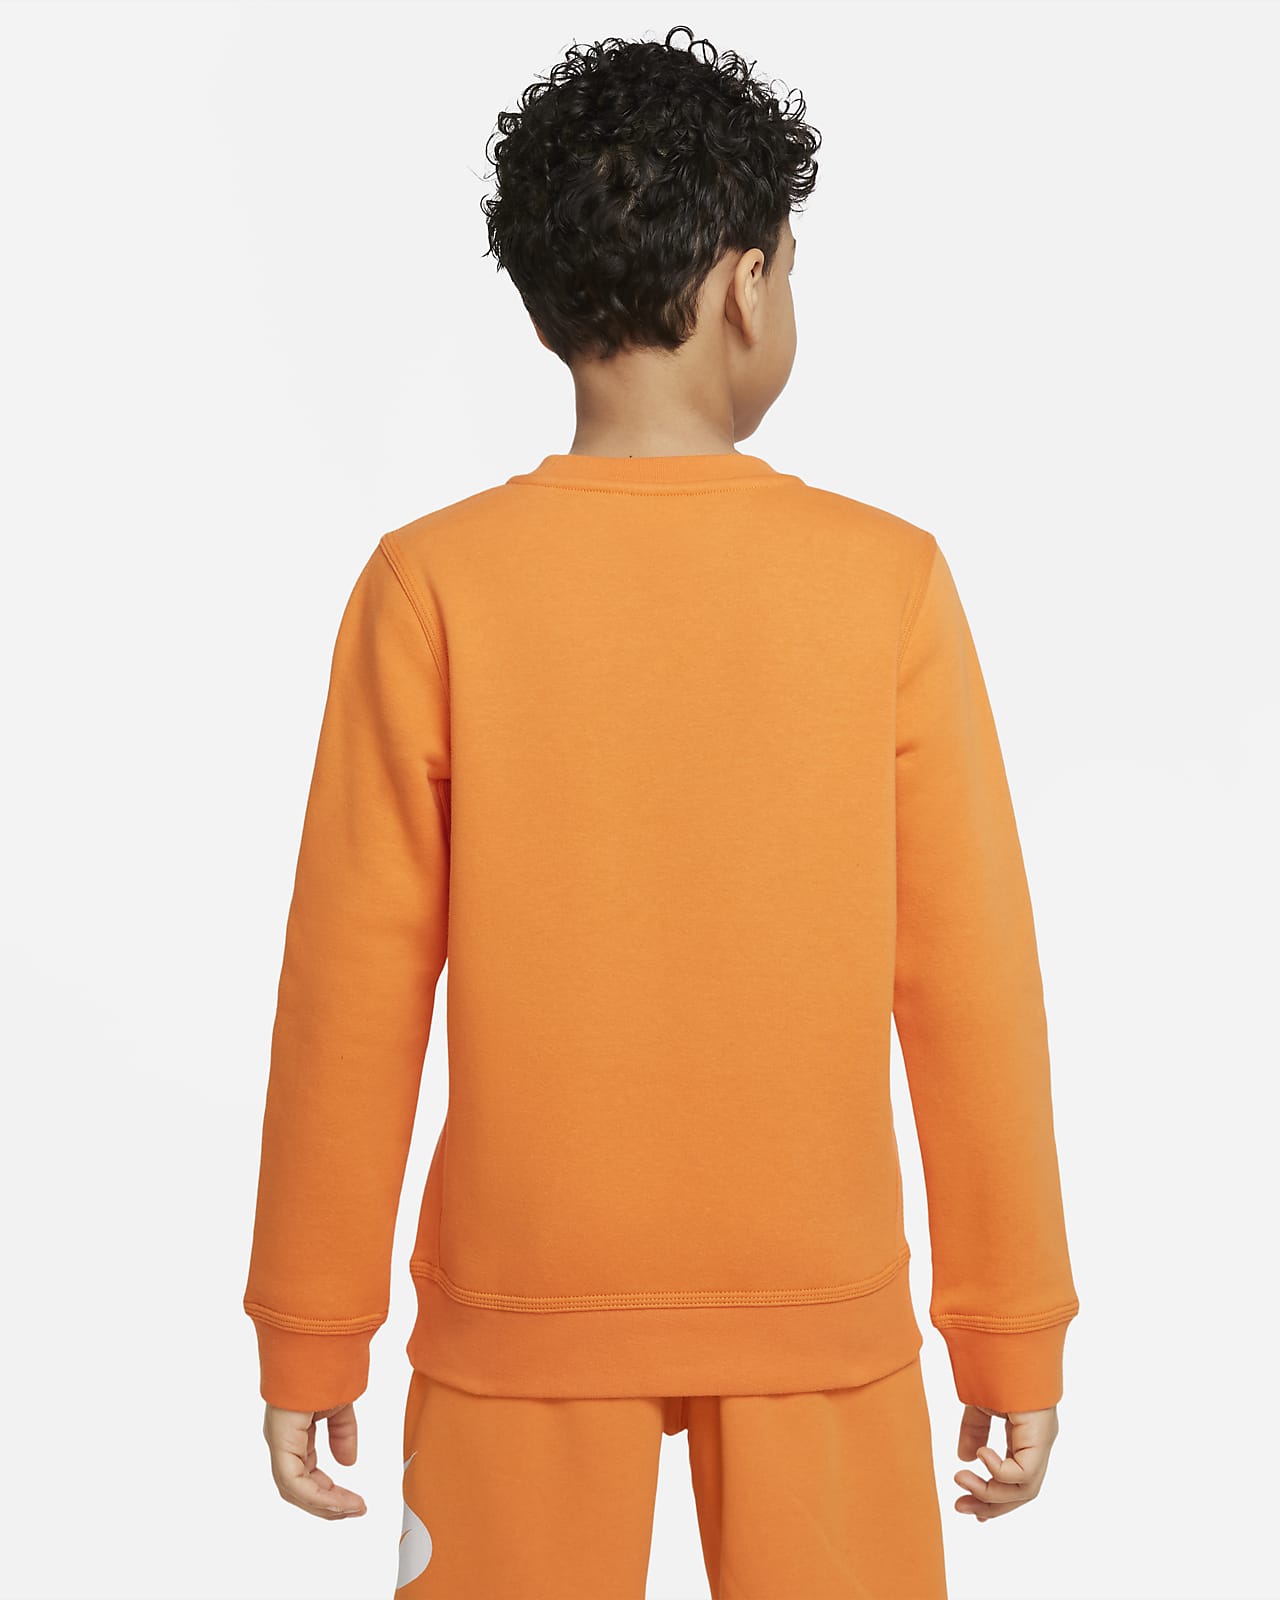 KIDS FASHION Jumpers & Sweatshirts Basic Athletic Club sweatshirt Red 3Y discount 84% 